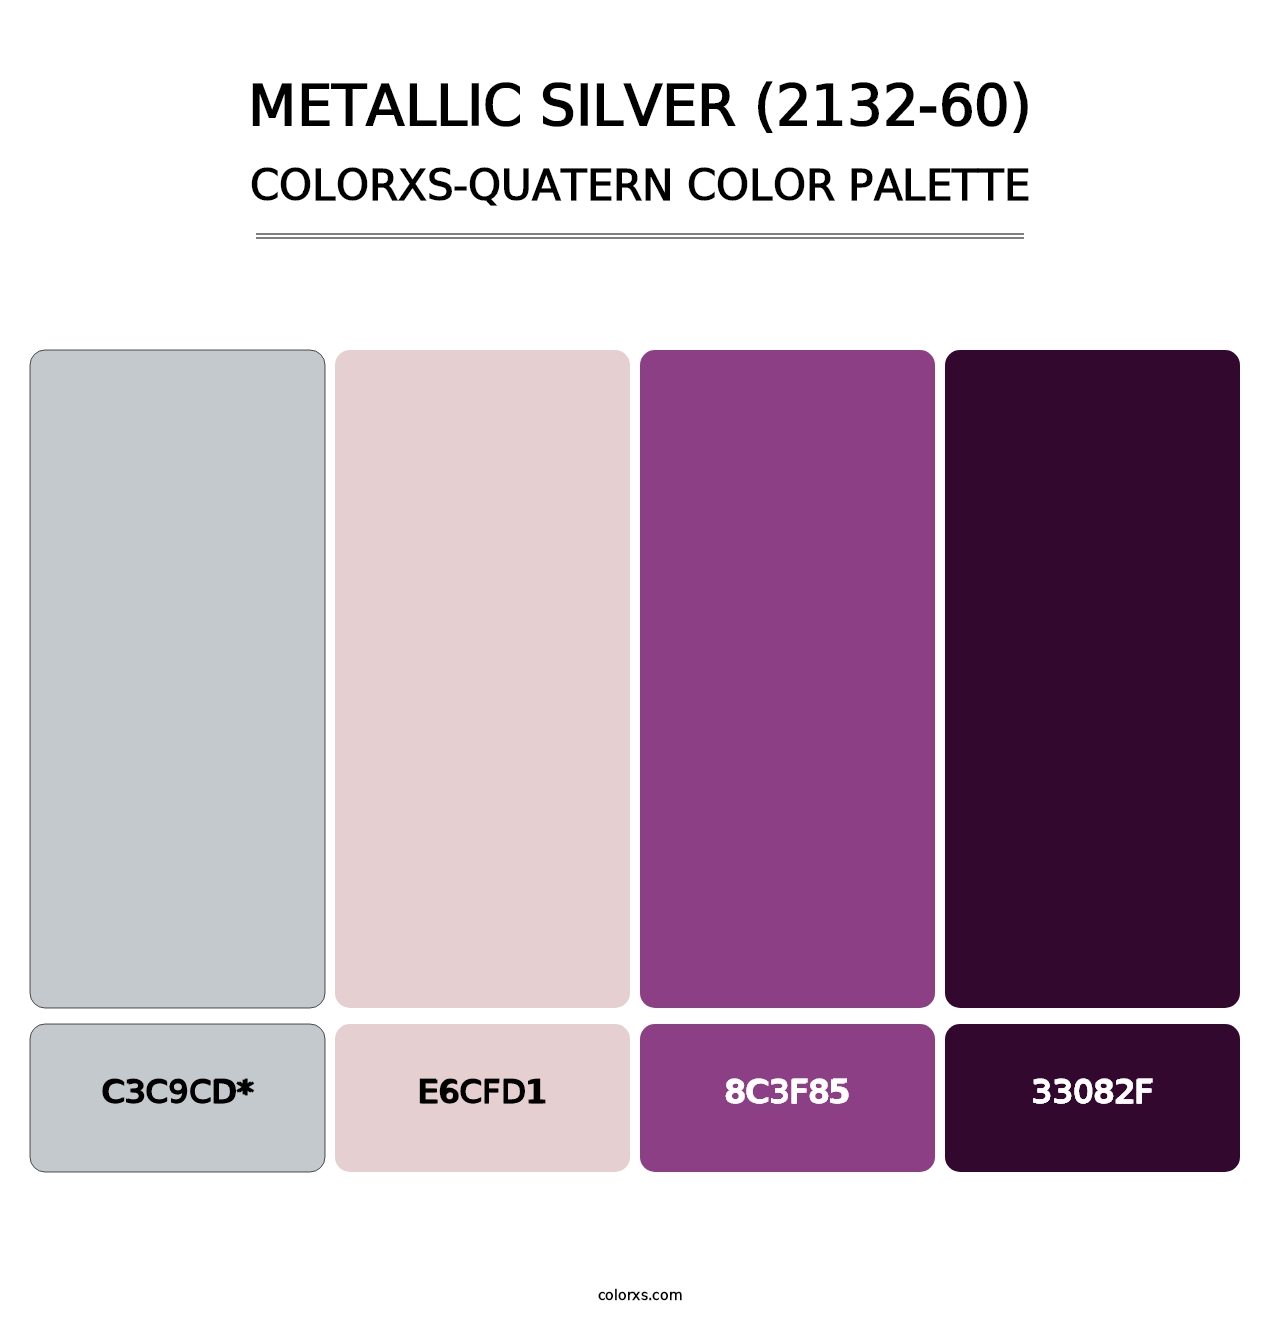 Metallic Silver (2132-60) - Colorxs Quad Palette